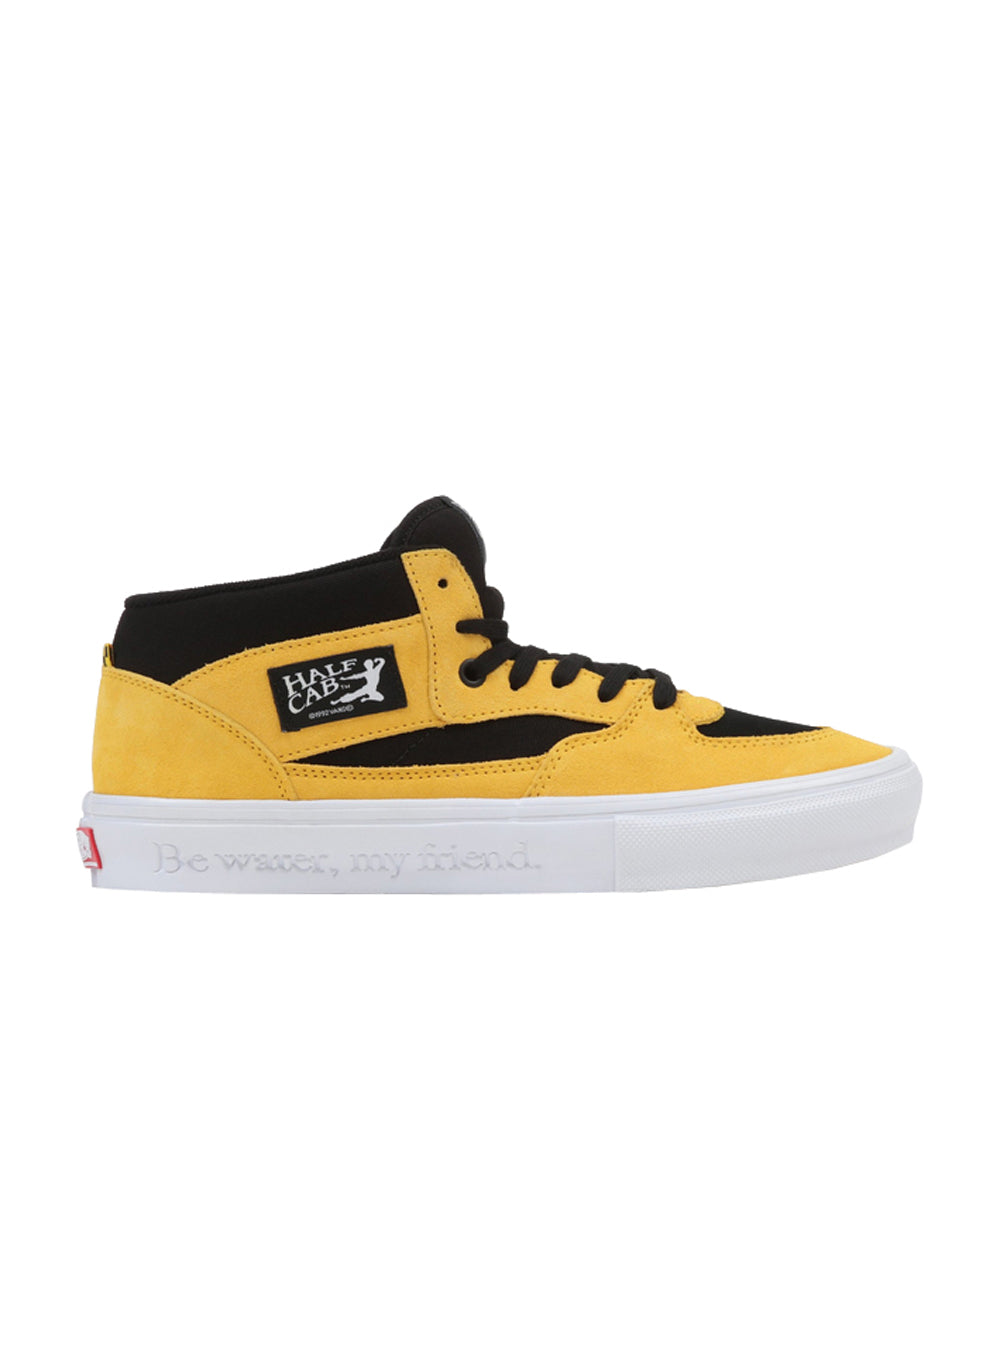 Vans Skate Half Cab Bruce Lee Black/Yellow 10